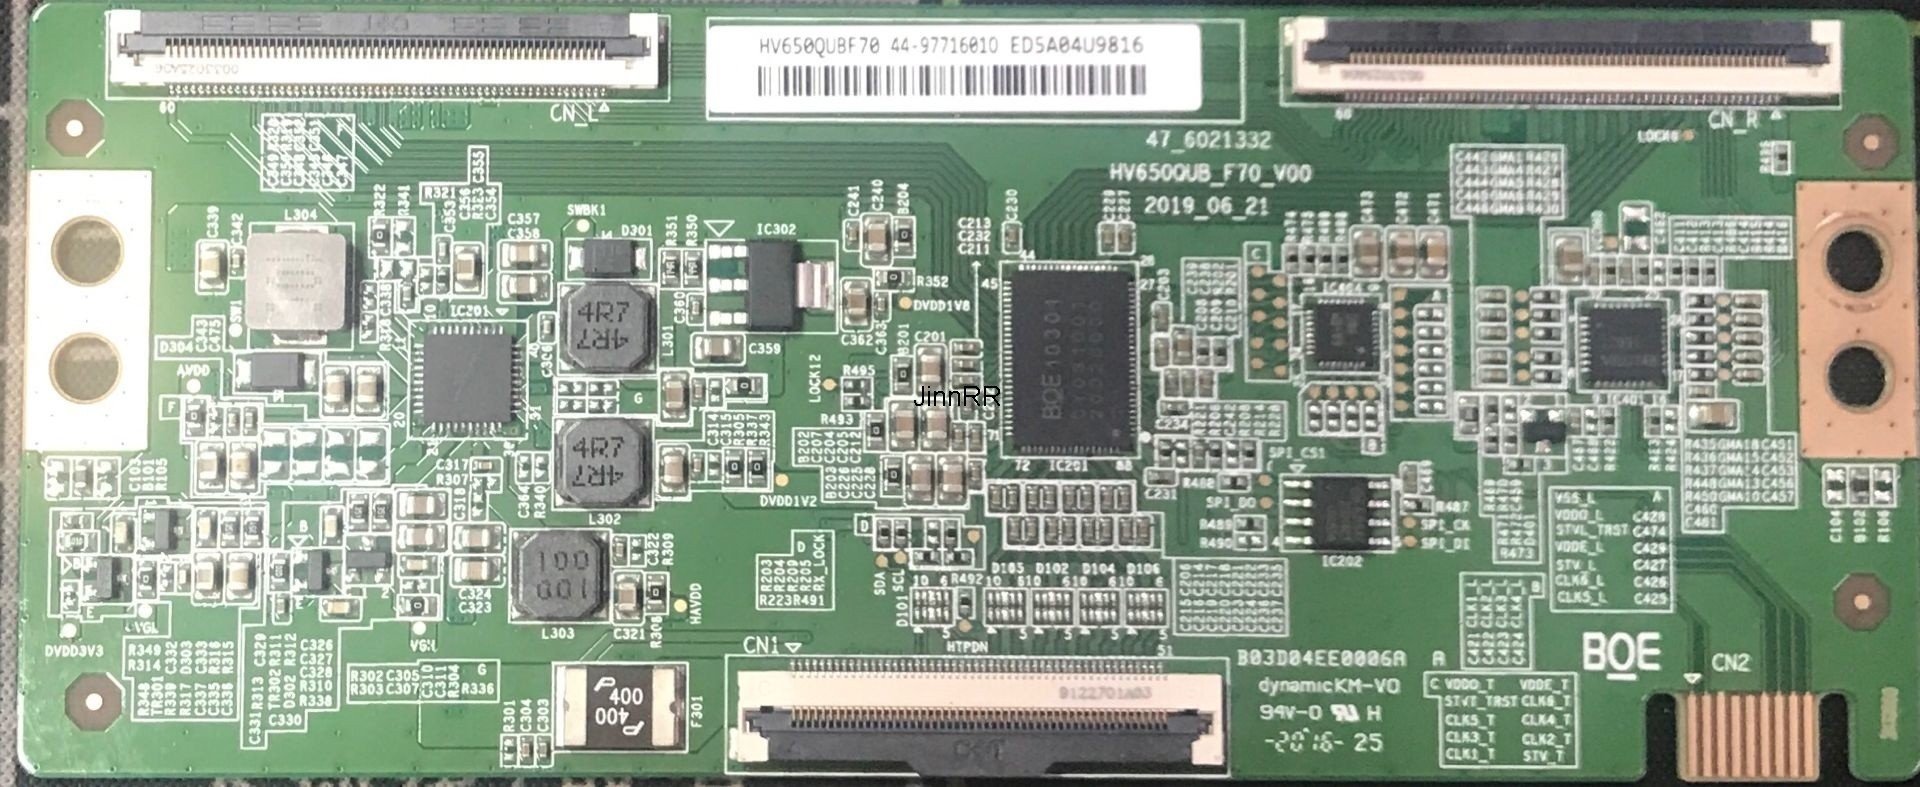 New and original hv650qub-f70-v00 logic board 47-6021332